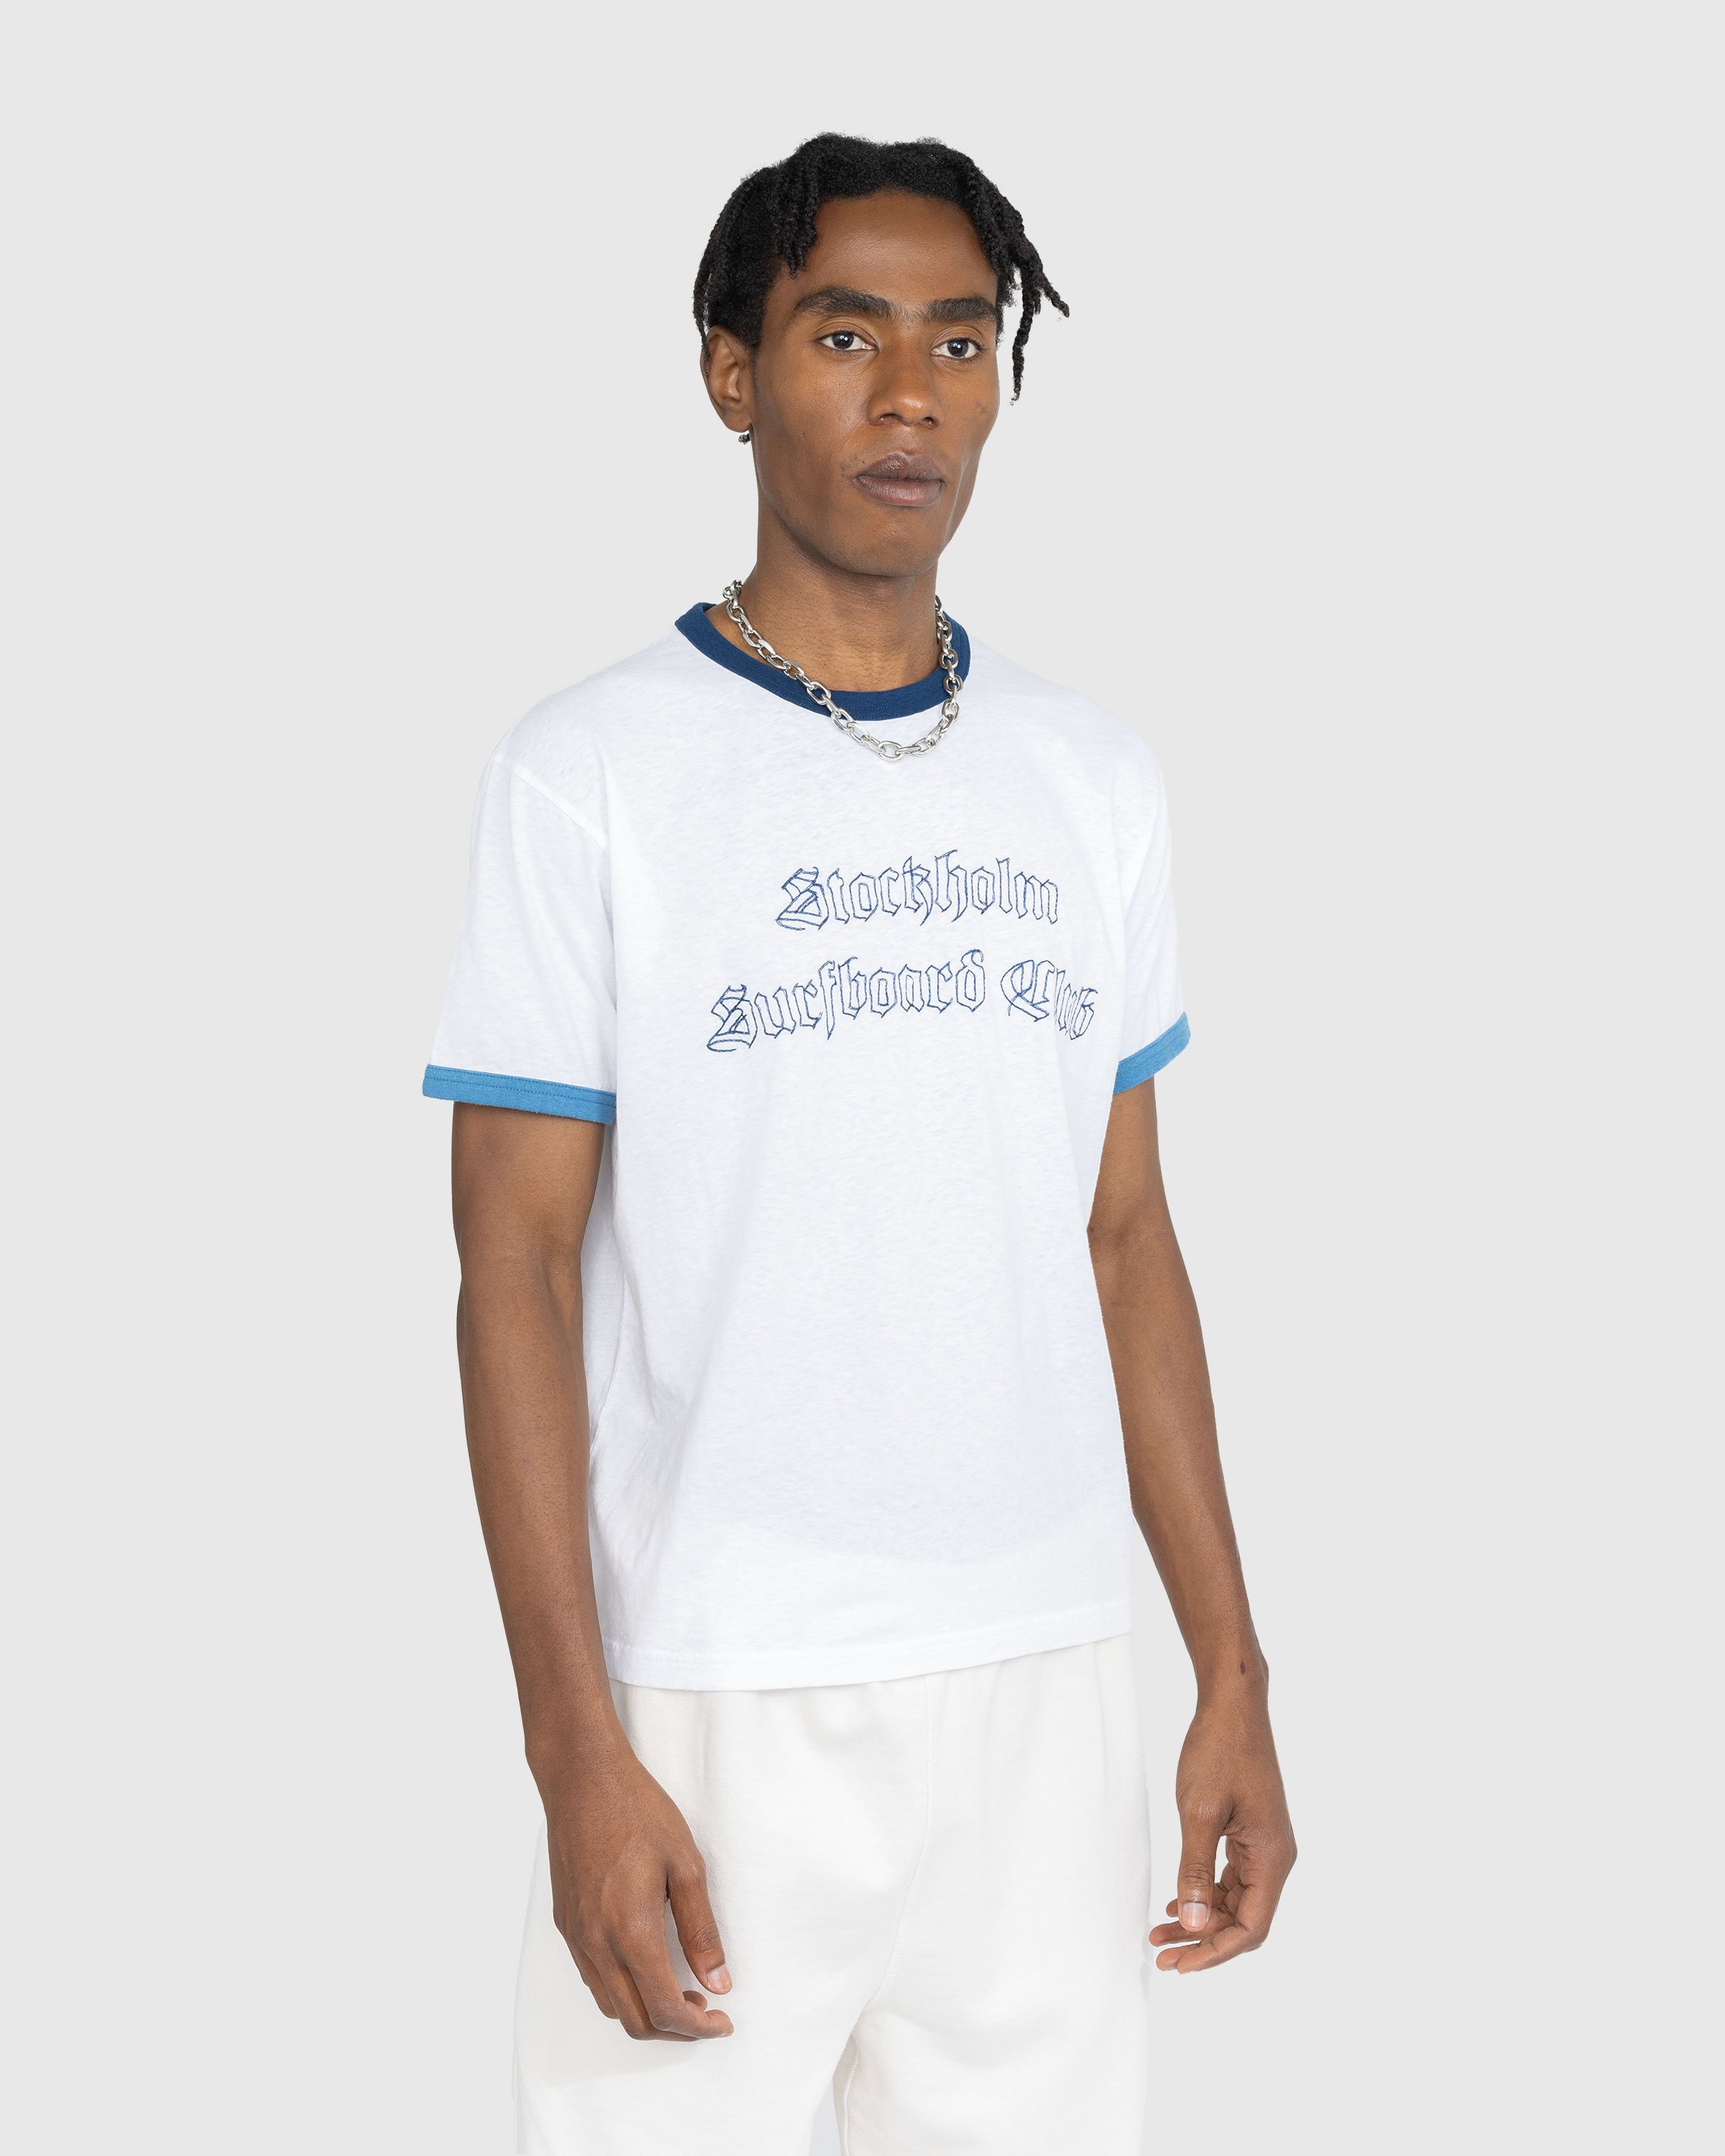 Stockholm Surfboard Club - Ringer T-Shirt White - Clothing - White - Image 2